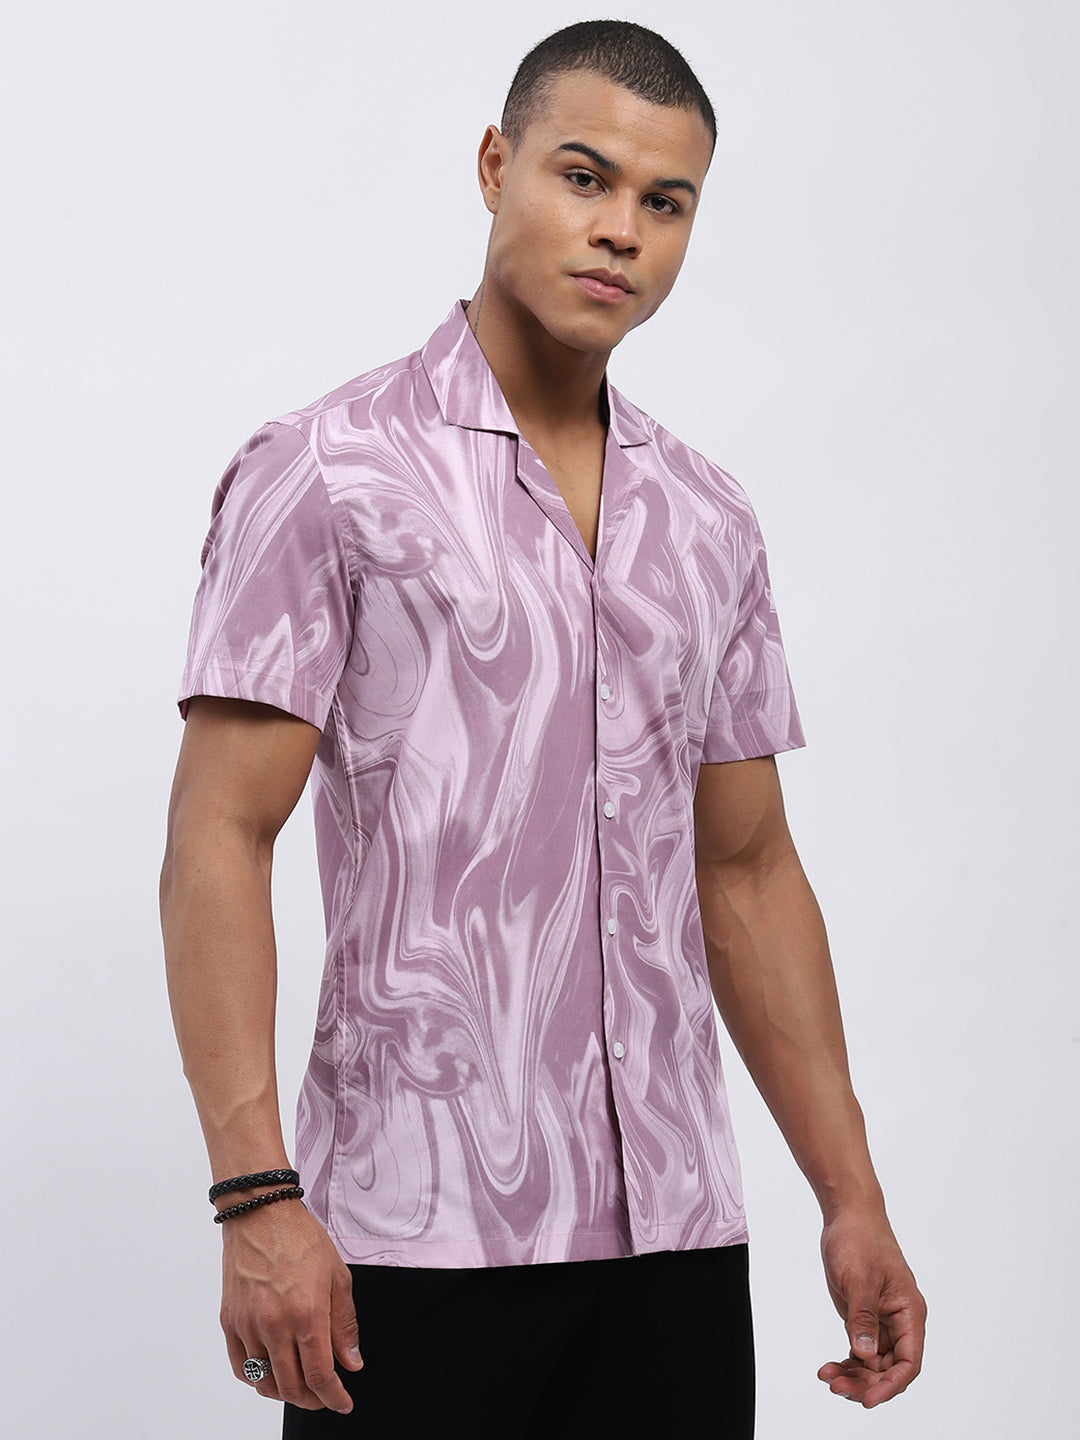 Lavender Marble Print Men's Resort Shirt